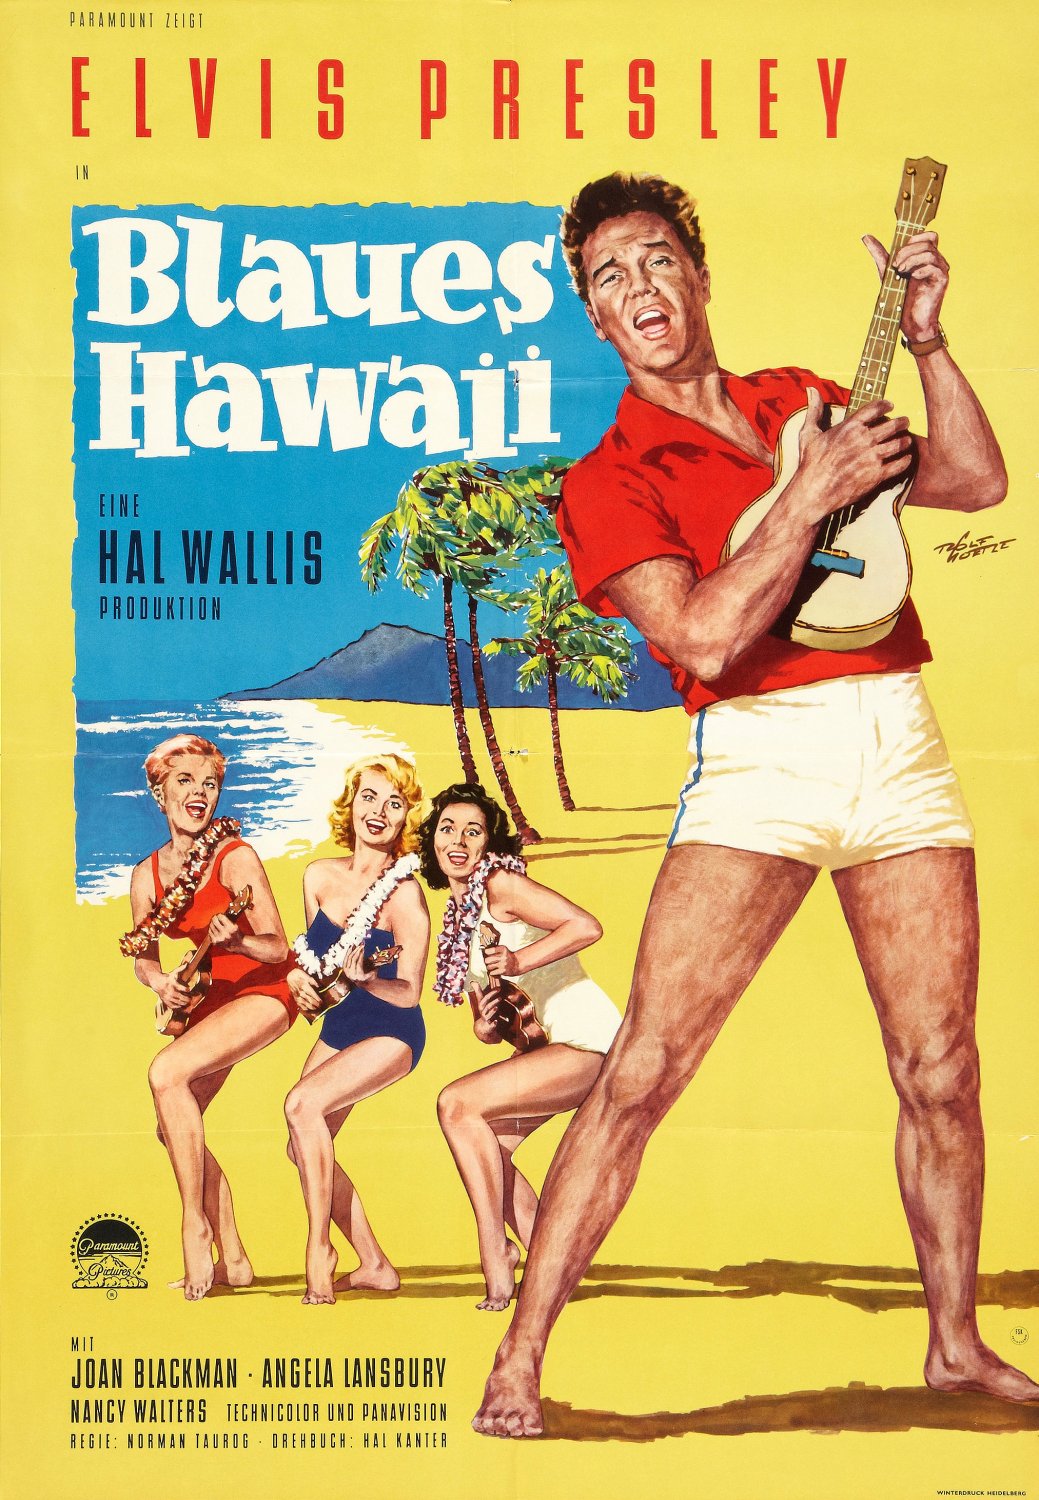 Blue Hawaii HD wallpapers, Desktop wallpaper - most viewed